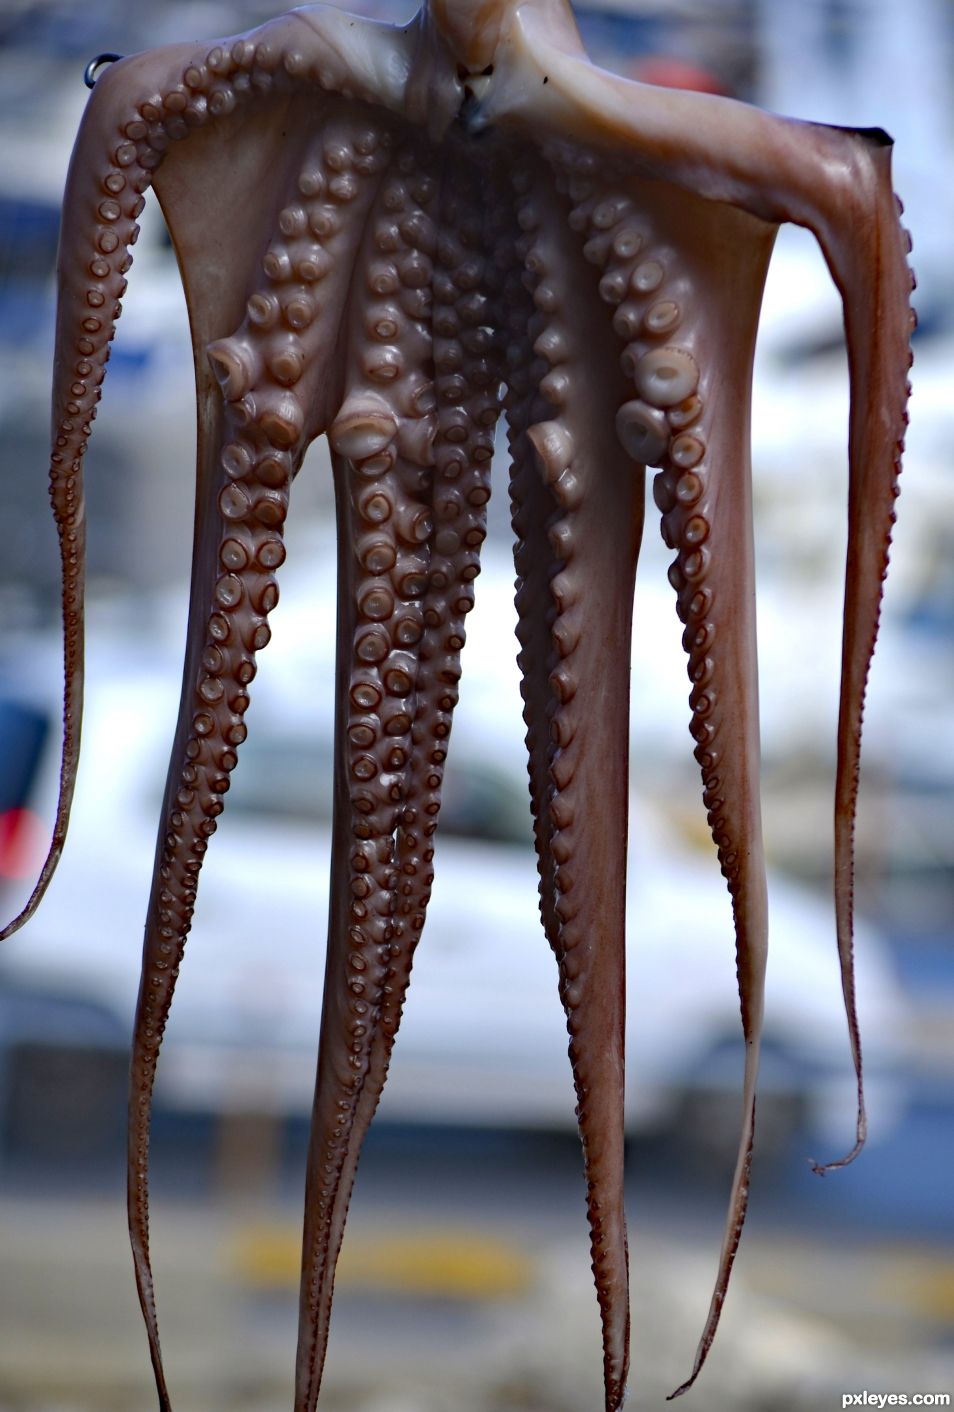 Octopus texture